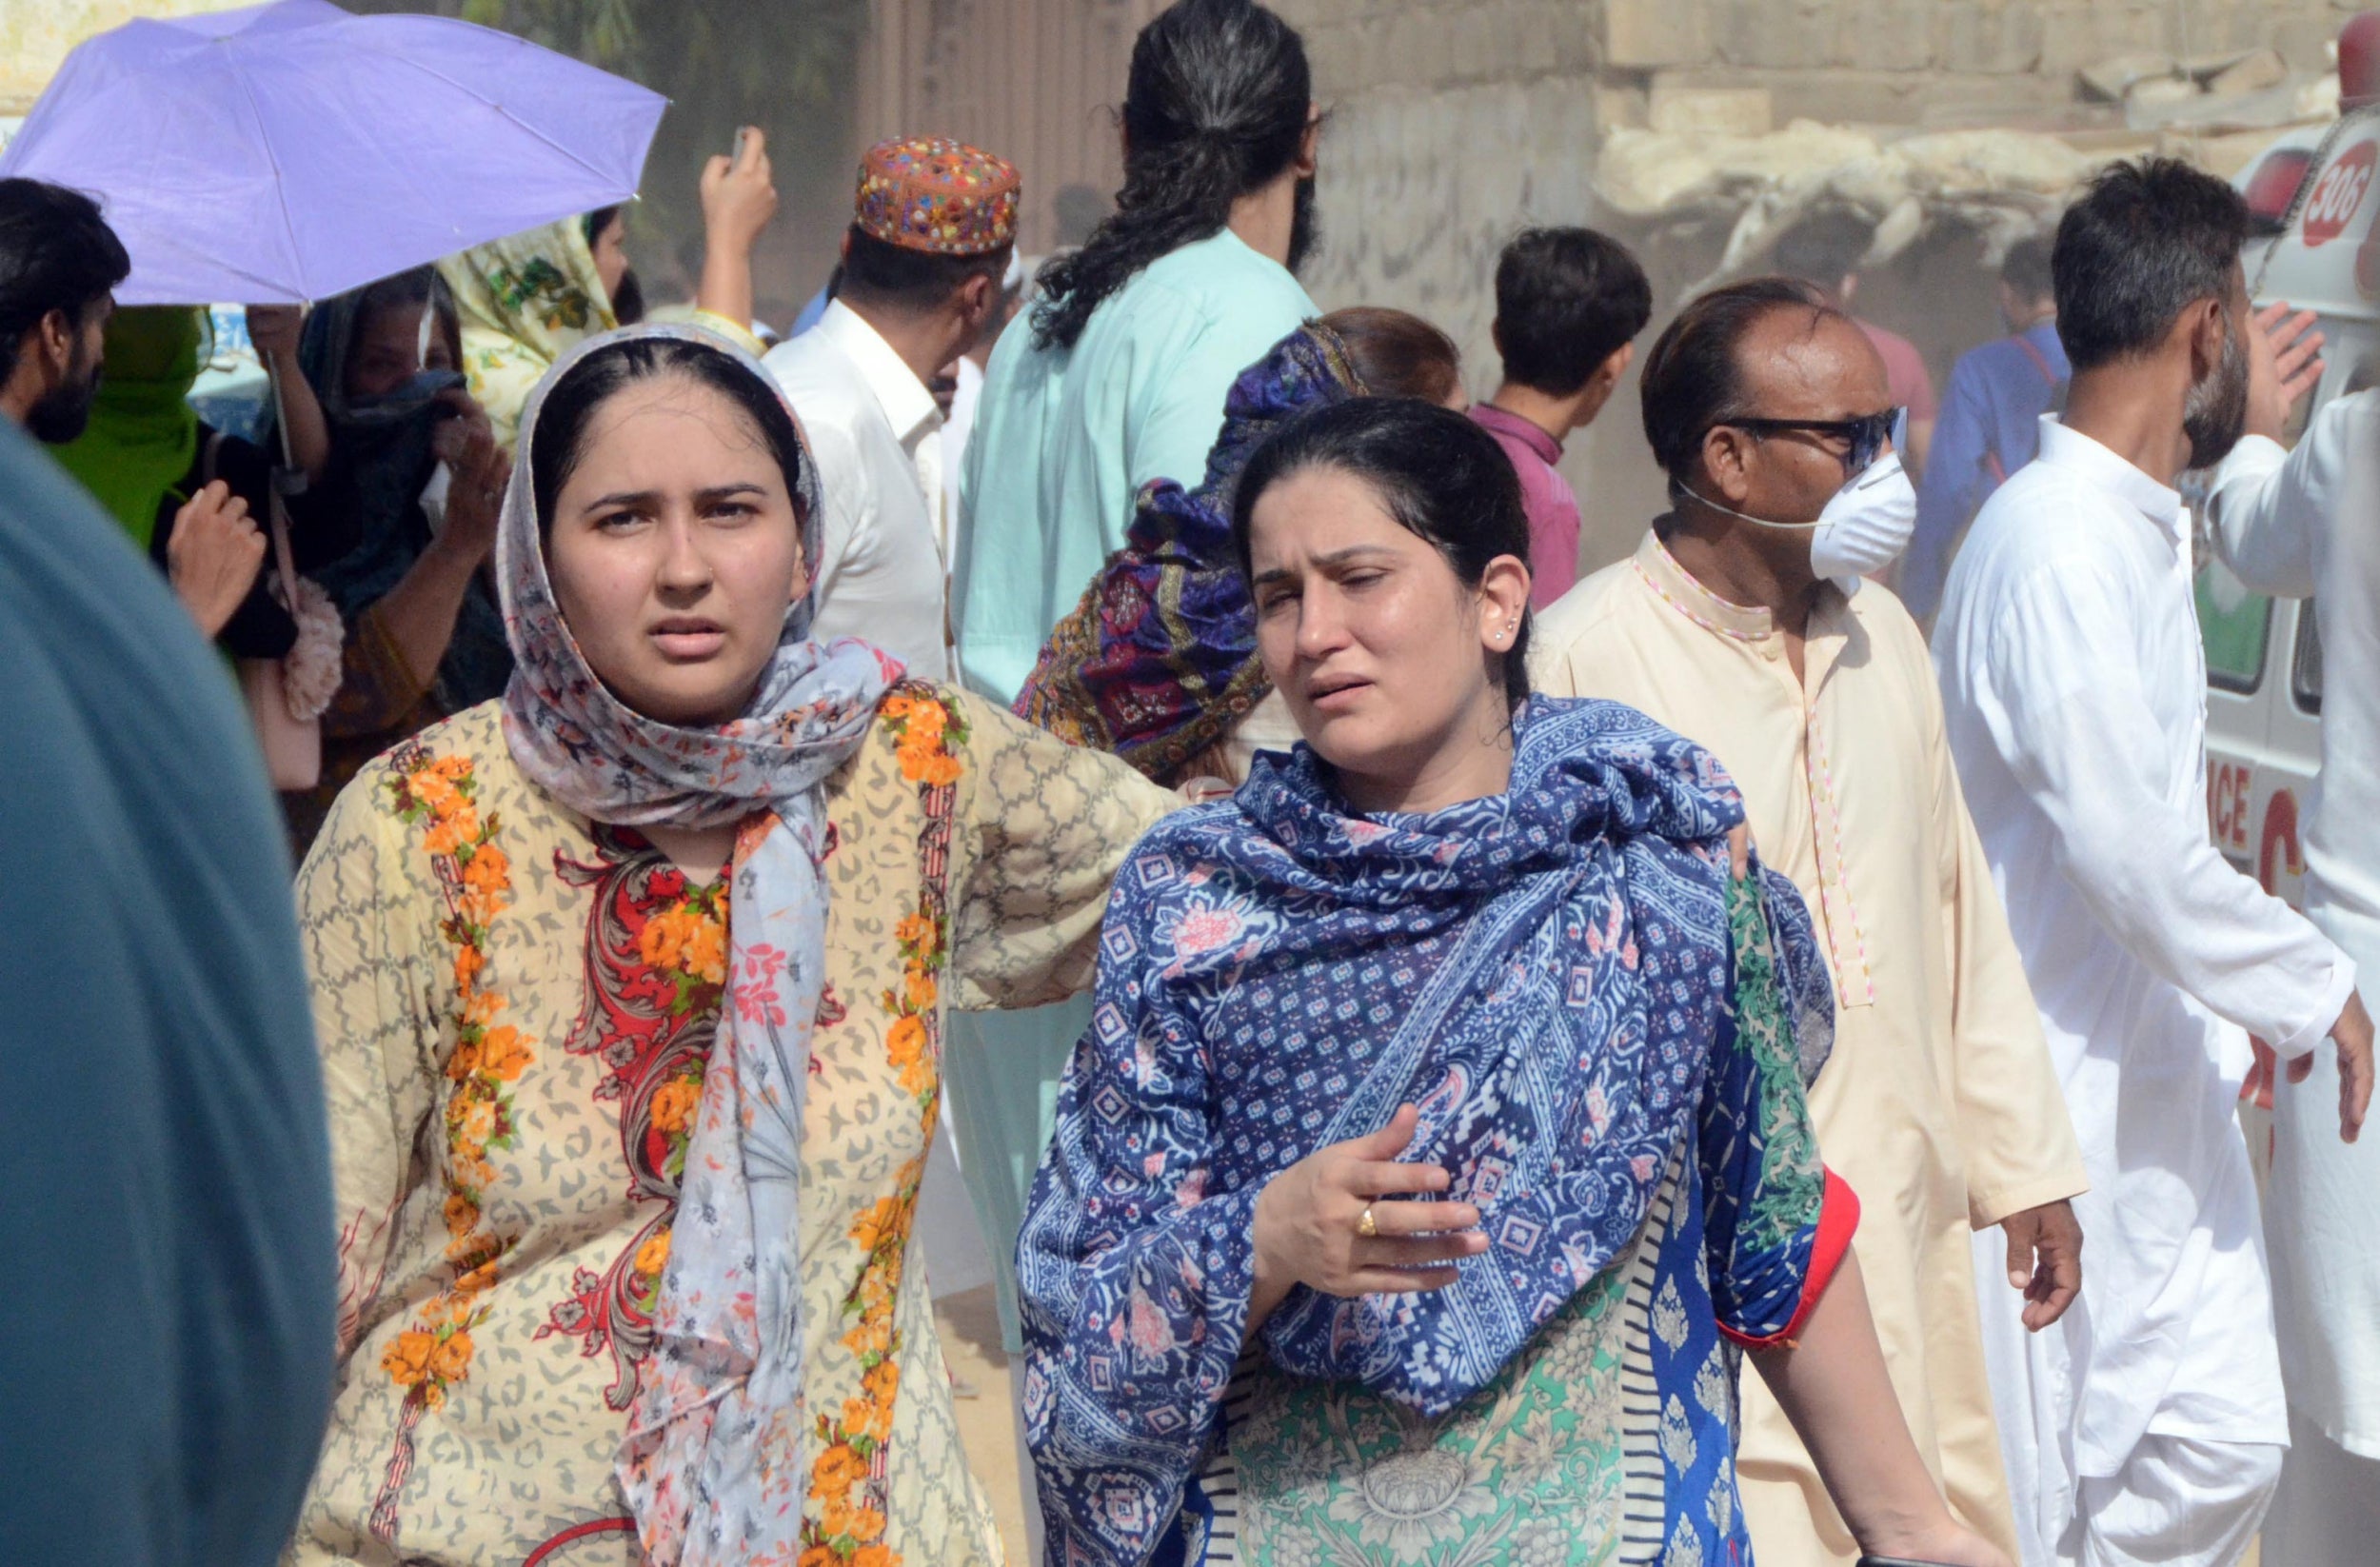 Pakistani people arrive at the site of a passenger plane crash in Karachi, Pakistan